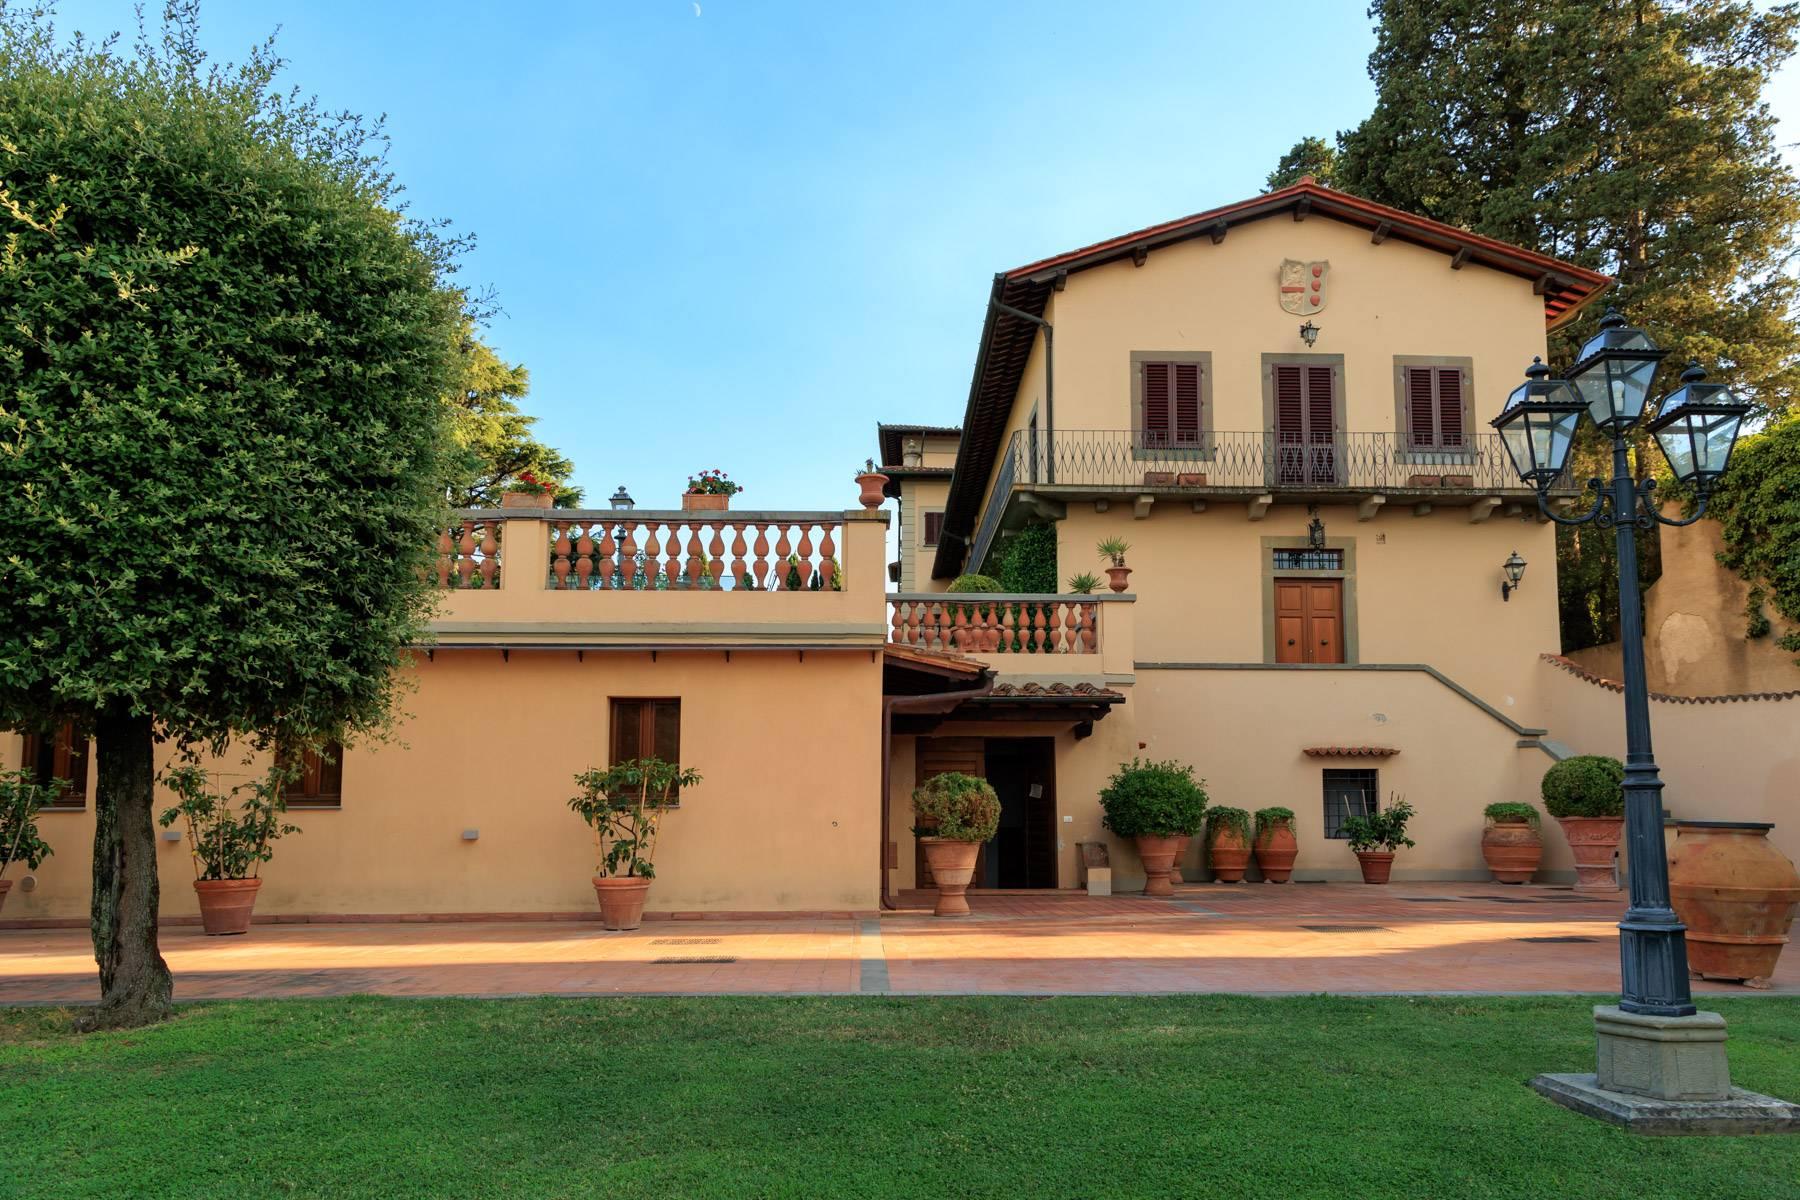 Apartment in a historic villa on the hills of Carmignano - 22